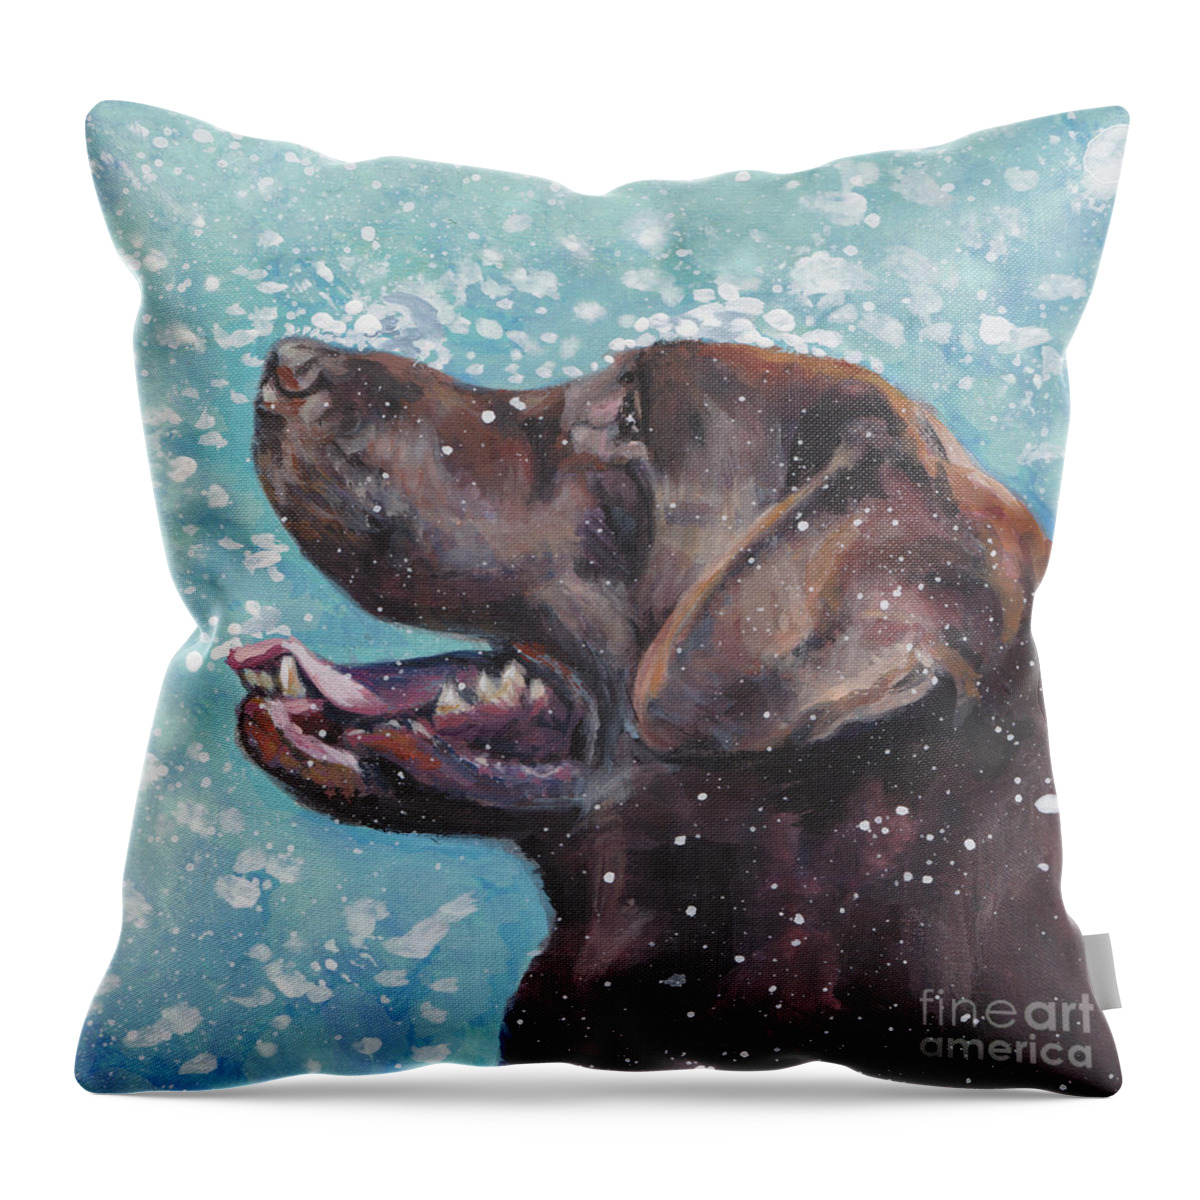 Labrador Retriever Throw Pillow featuring the painting Chocolate Labrador Retriever by Lee Ann Shepard